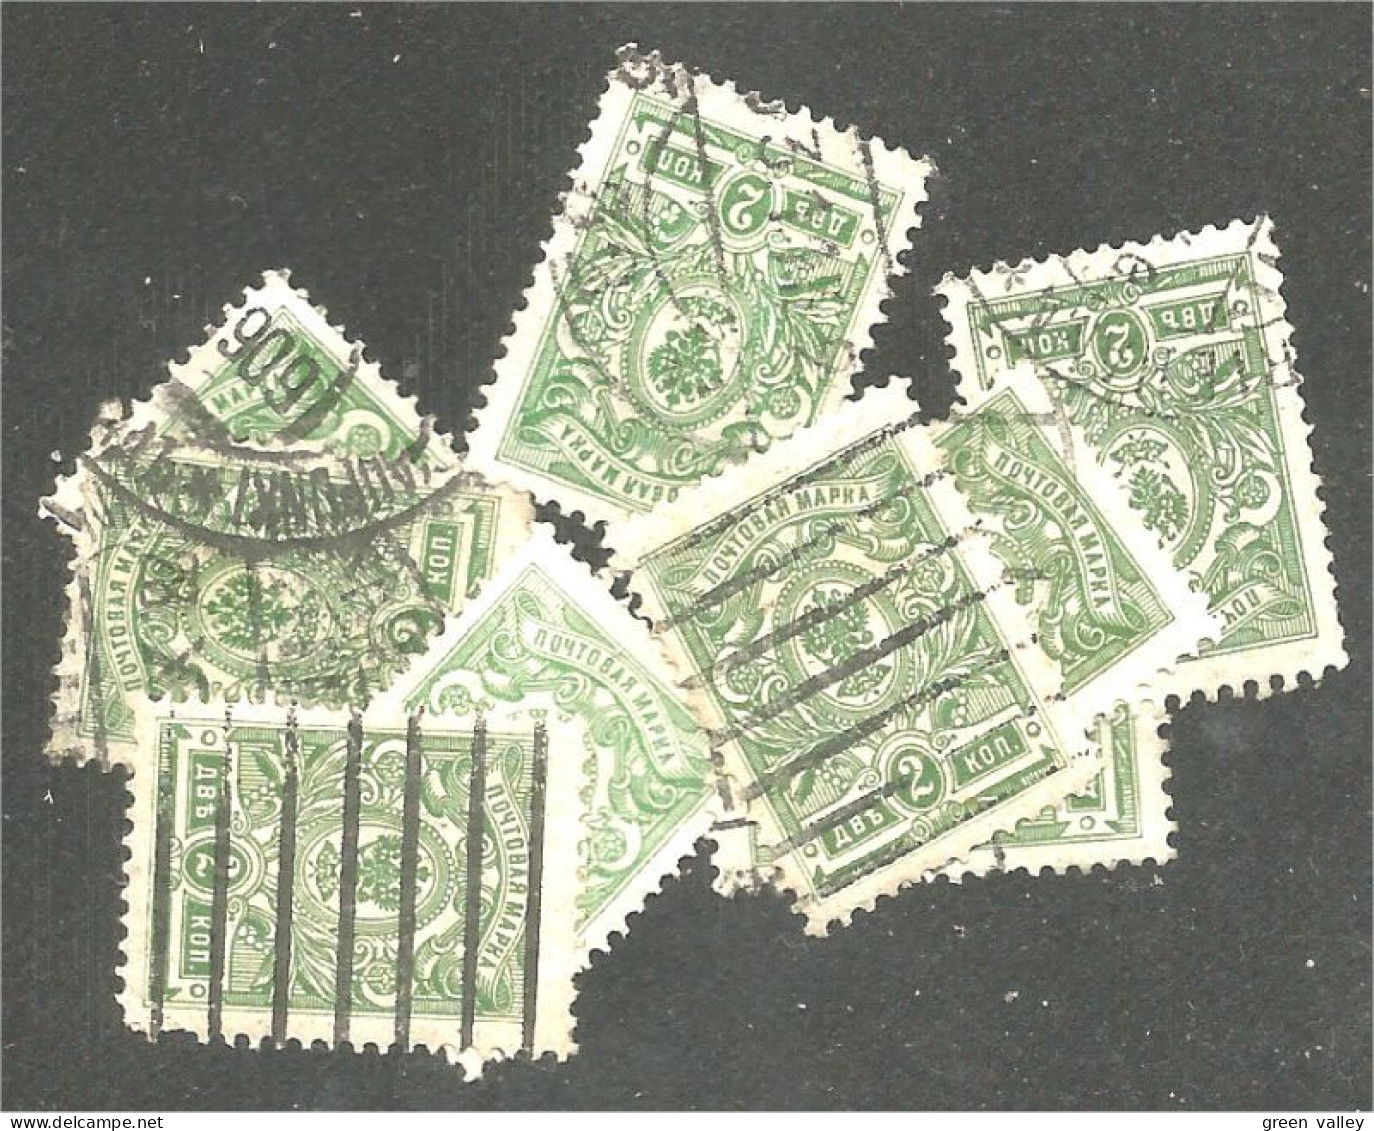 771 Russie 2k 1909 9 Stamps Green Vert Aigle Imperial Eagle Post Horn Cor Postal Varnish (RUZ-352) - Gebruikt